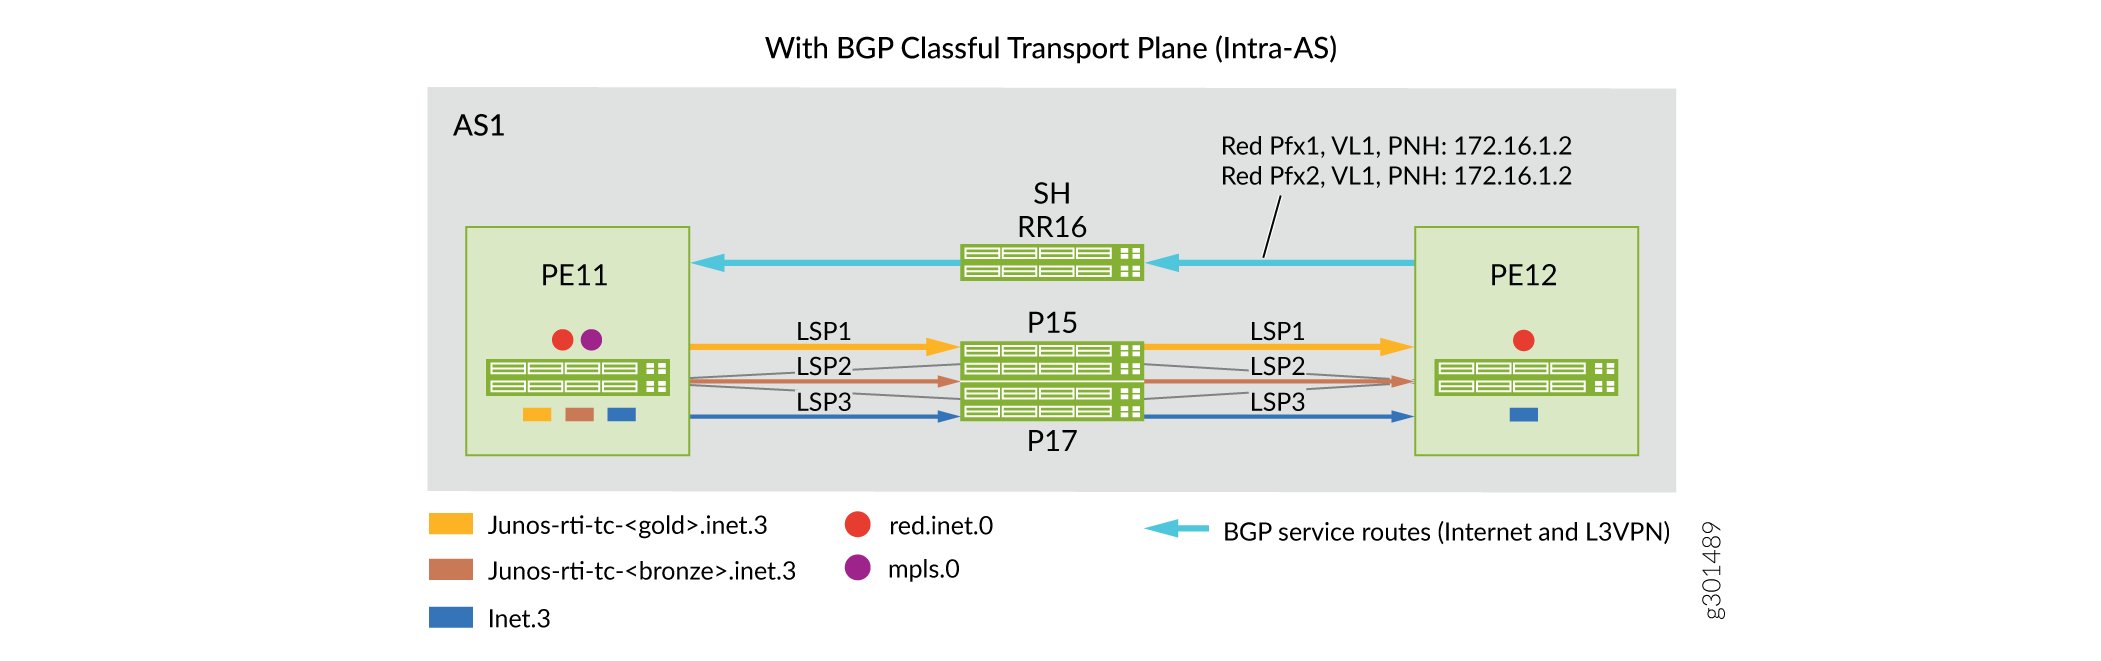 AS 도메인 내: BGP 클래스풀 전송 플레인 구현을 위한 전후 시나리오